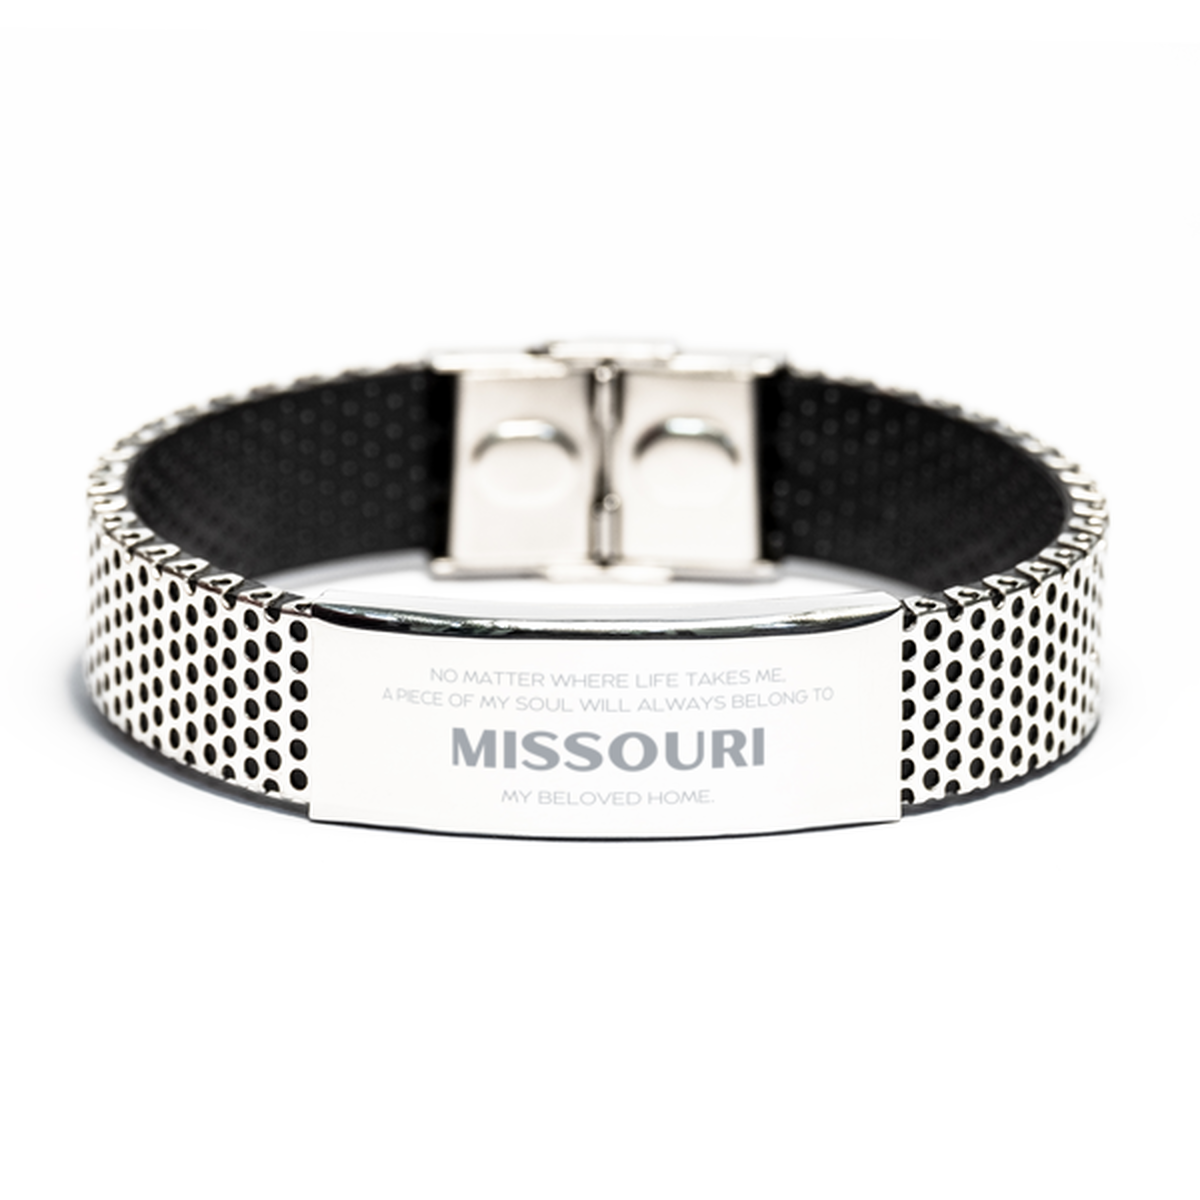 Love Missouri State Gifts, My soul will always belong to Missouri, Proud Stainless Steel Bracelet, Birthday Unique Gifts For Missouri Men, Women, Friends